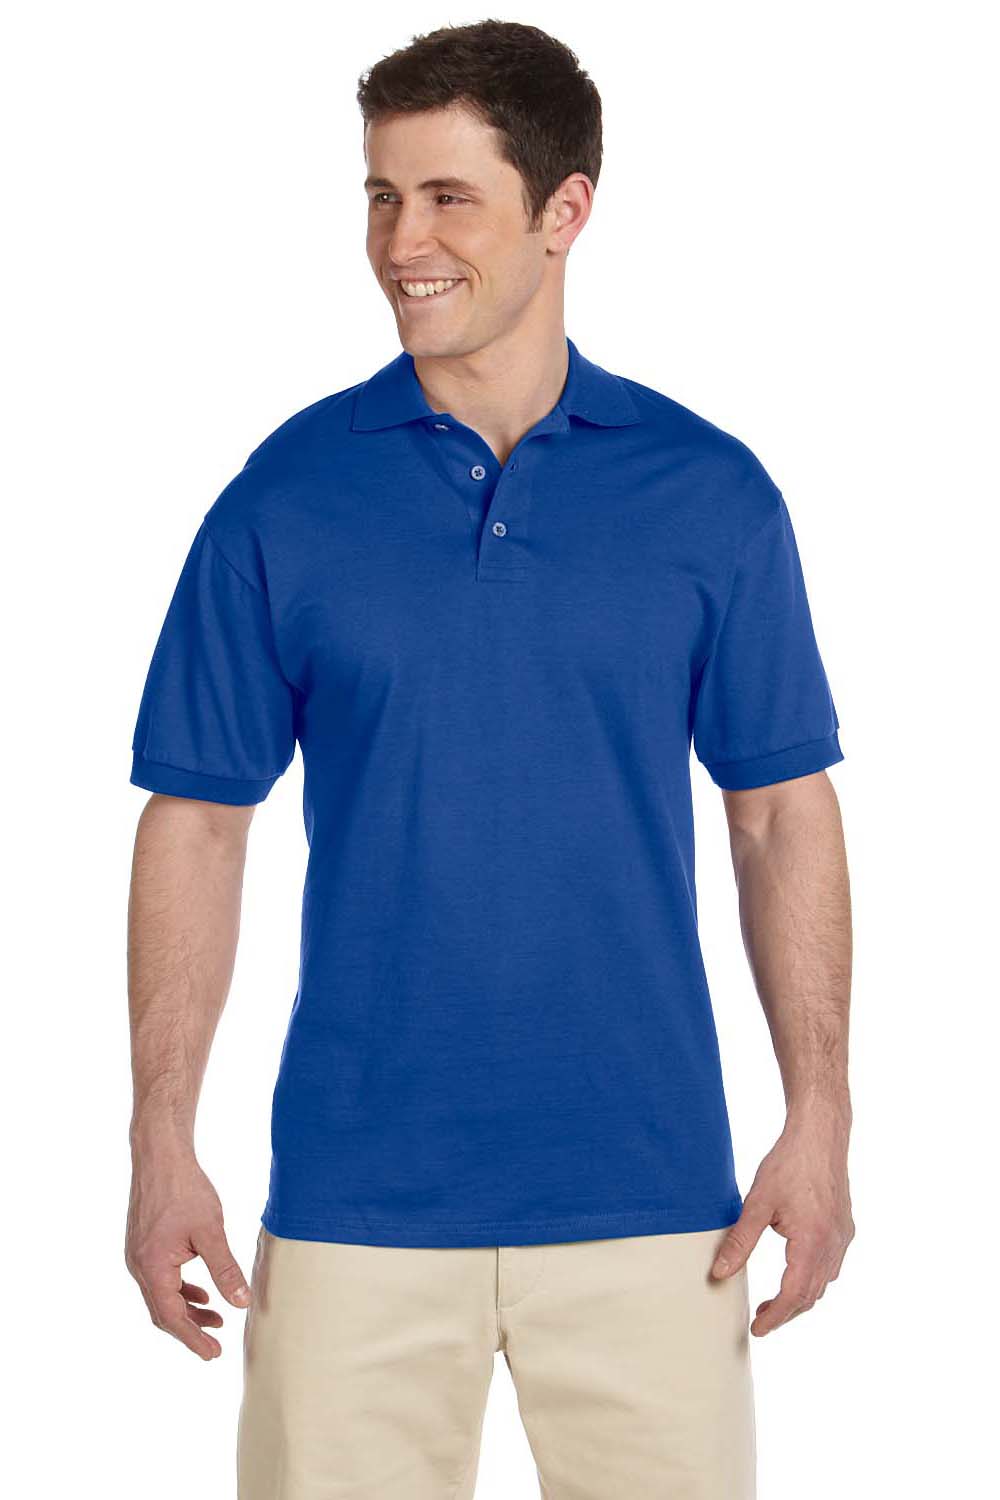 Jerzees J100 Mens Short Sleeve Polo Shirt Royal Blue Front